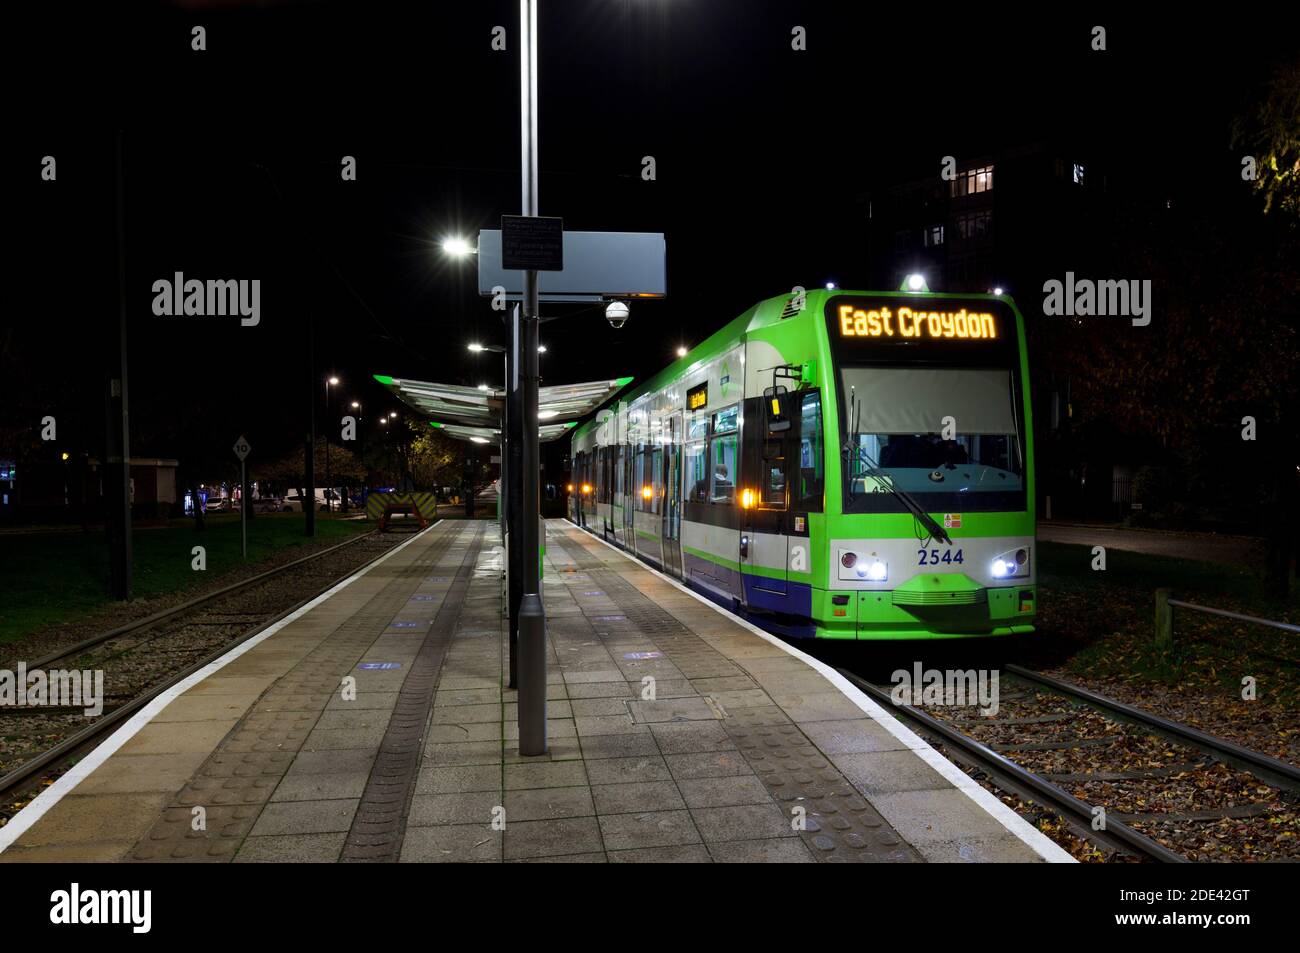 Erste Londoner Straßenbahnen Croydon Tramlink Bombardier flexible schnelle CR4000 Tram Nr. 2544 an New Addington Tram Endstation in einer dunklen Nacht. Stockfoto